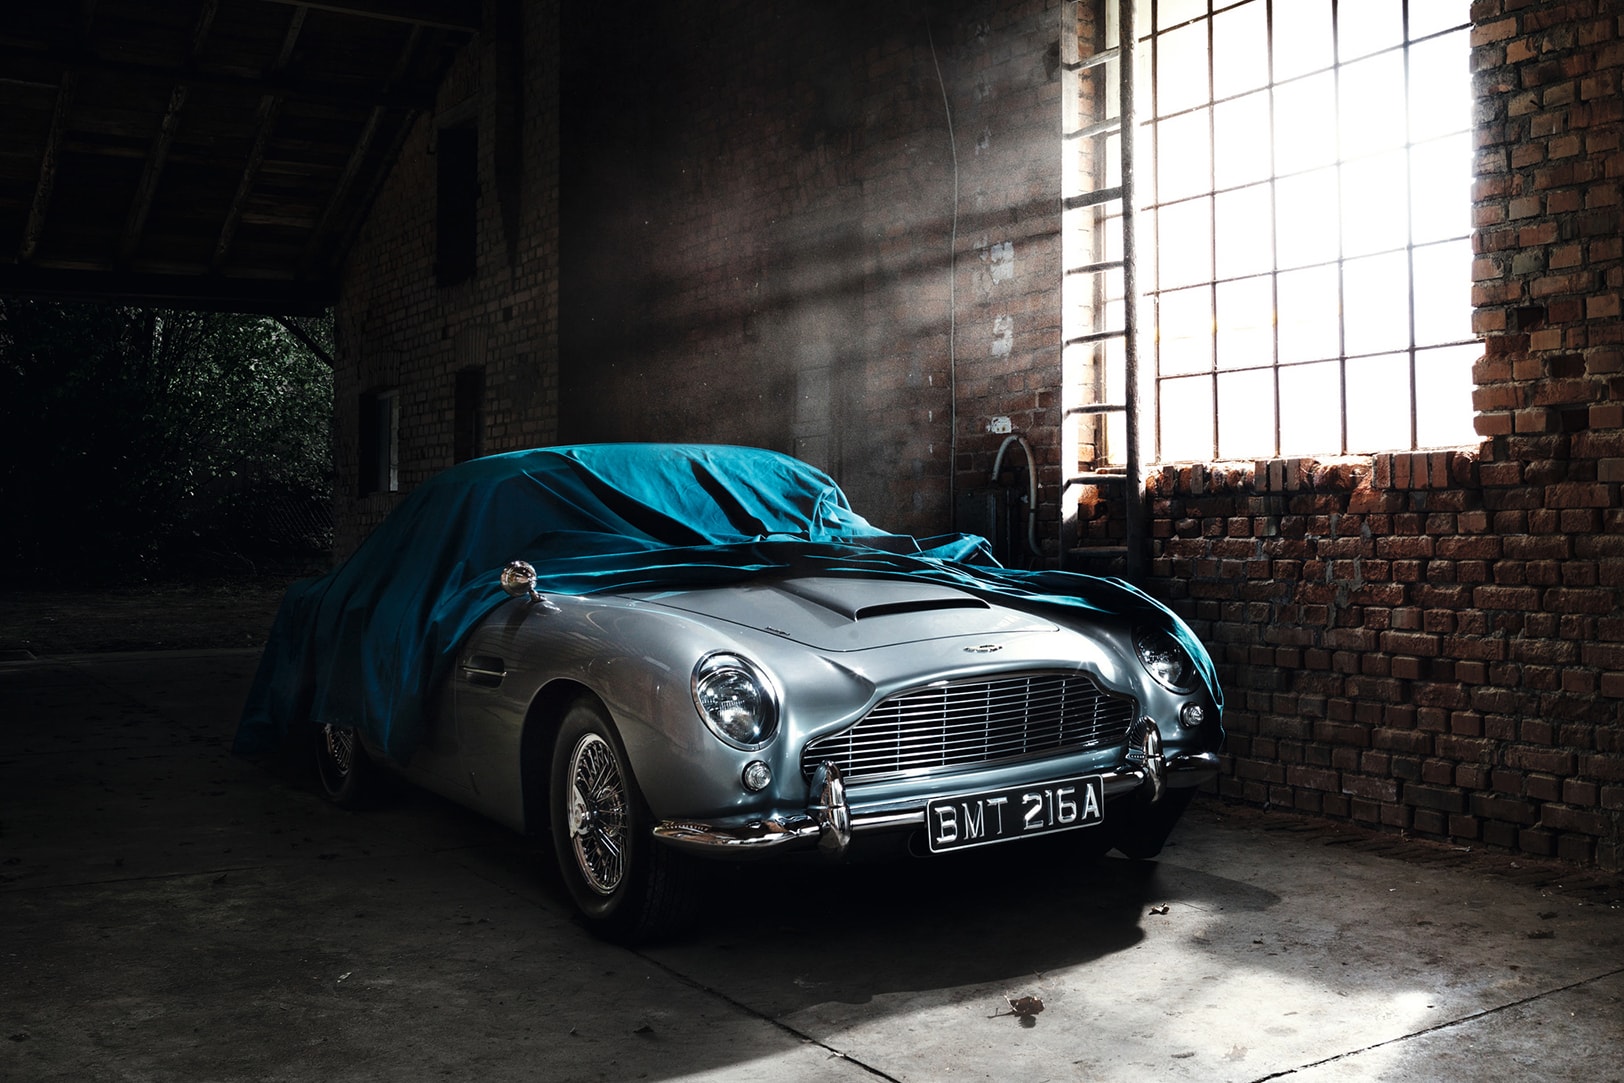 Classic Cars Parked Garages Ateliers WE! Shoot It Photography Project Ferrari Porsche Bentley